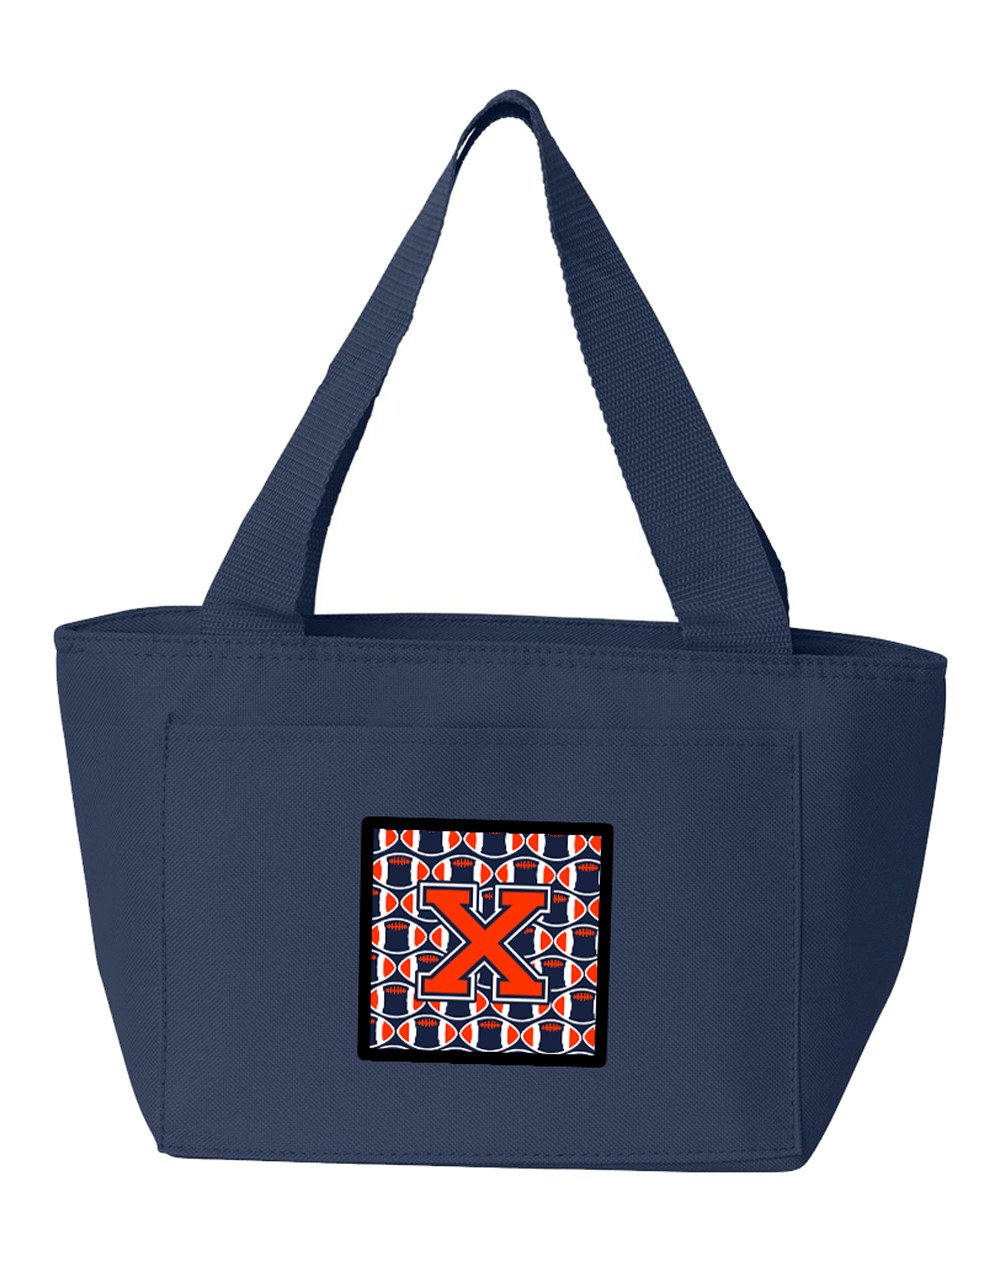 Letter X Football Orange, Blue and white Lunch Bag CJ1066-XNA-8808 by Caroline's Treasures